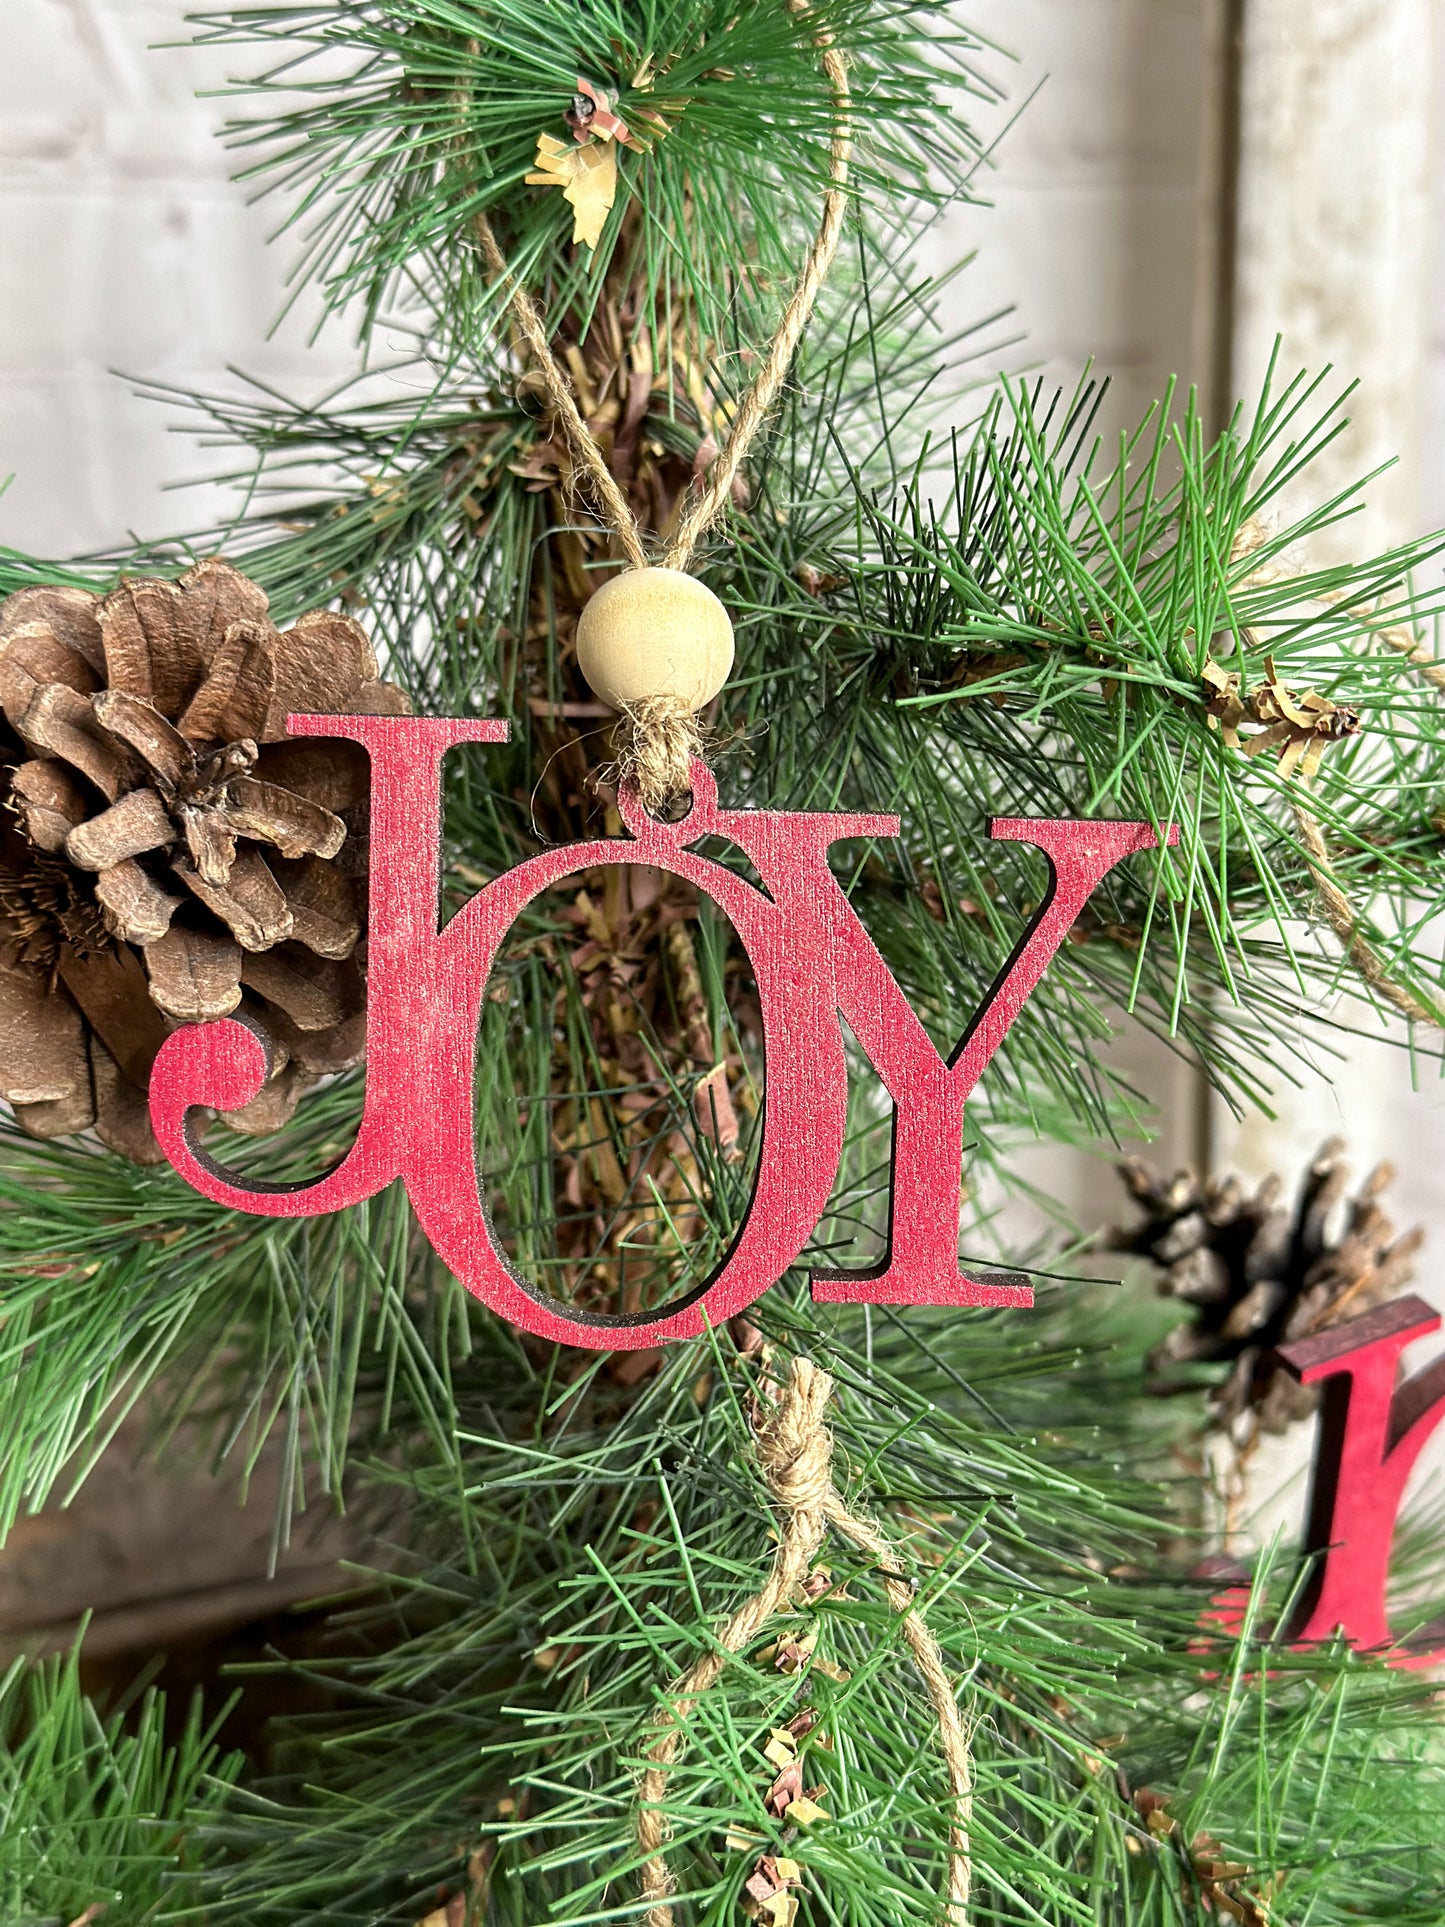 Ornament of Joy: Share the Spirit of Christmas